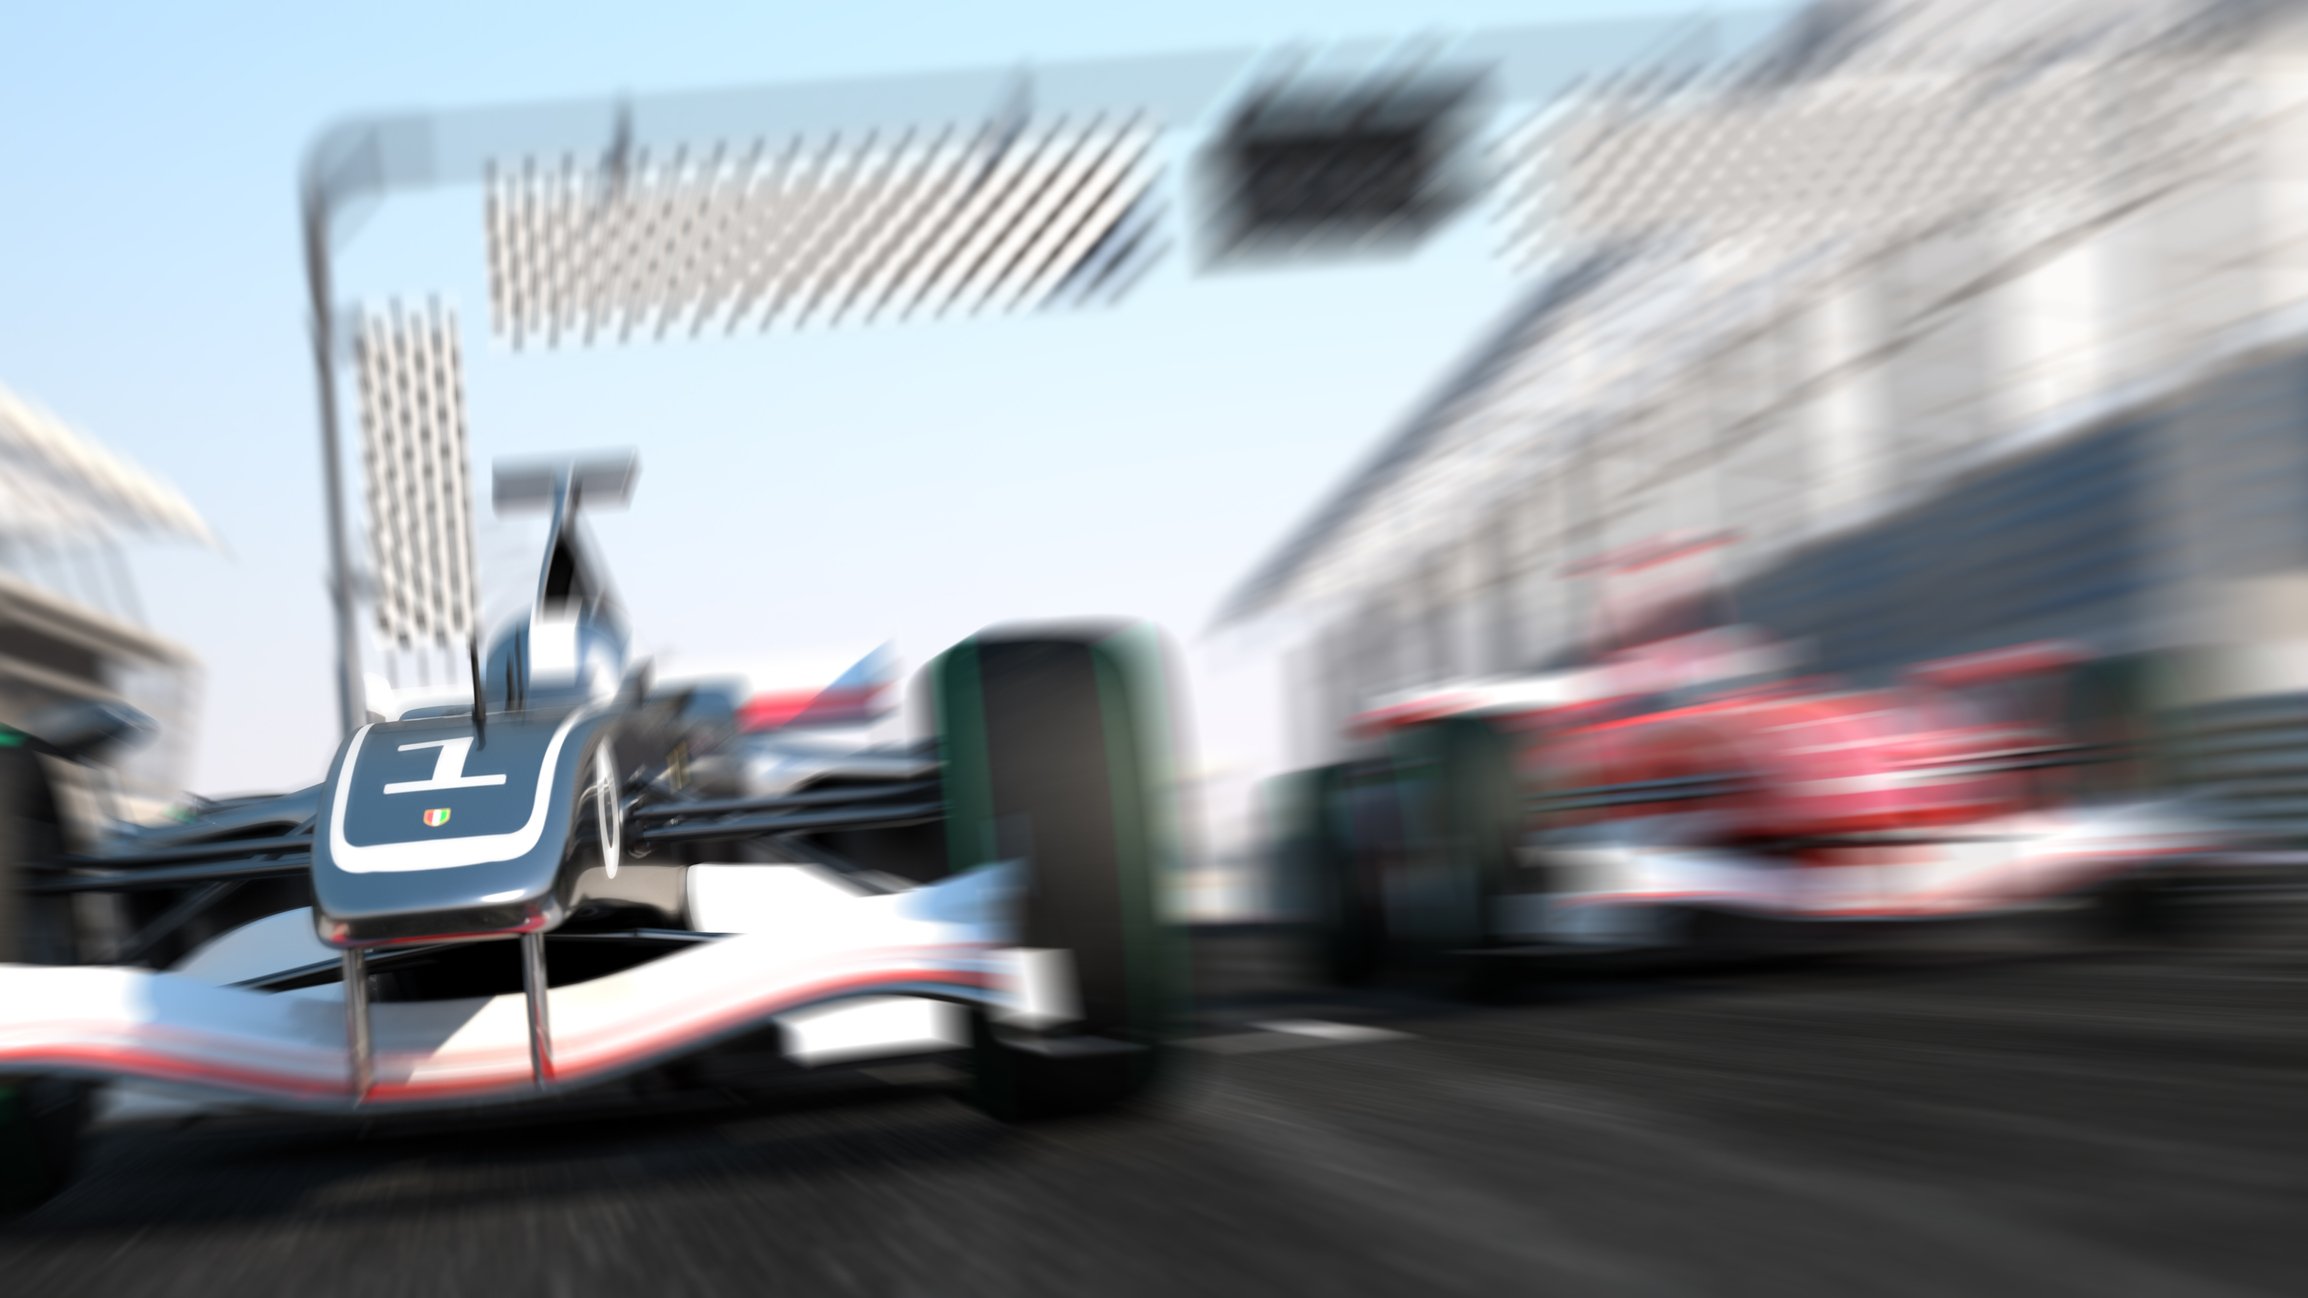 Racecar Formula 1  getty images